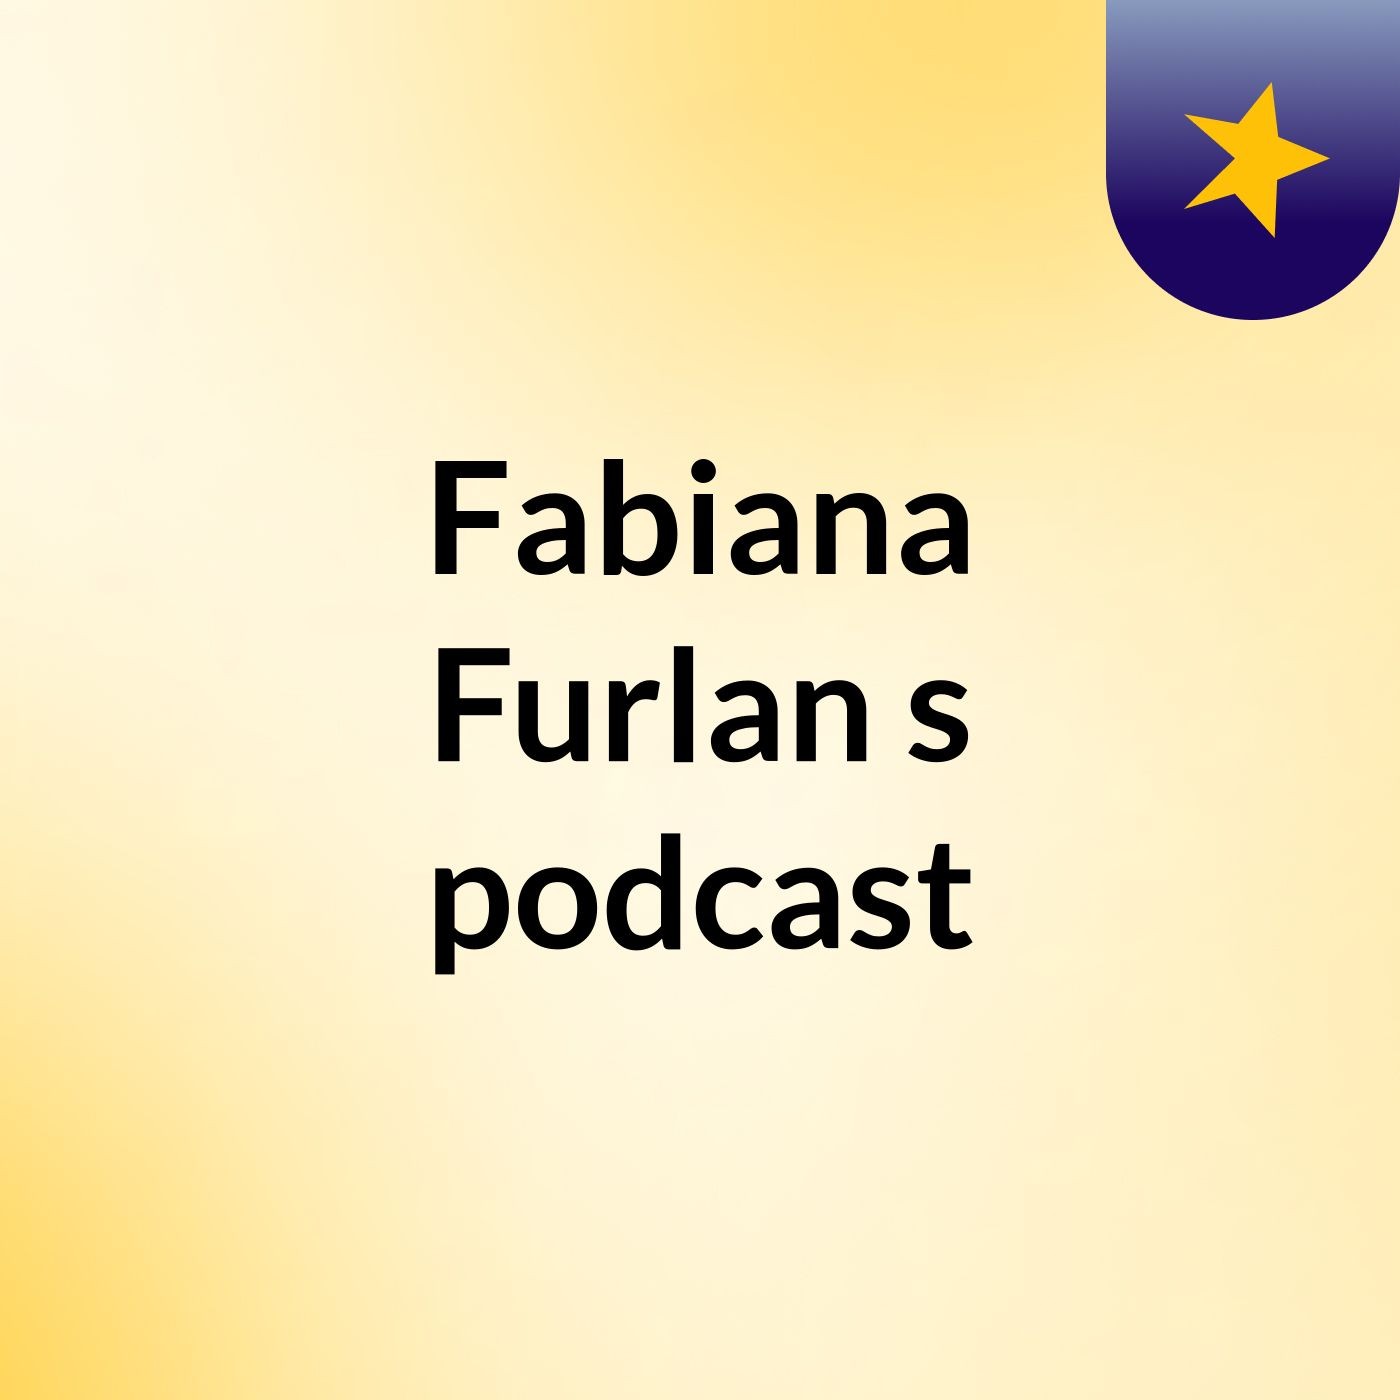 Fabiana Furlan's podcast